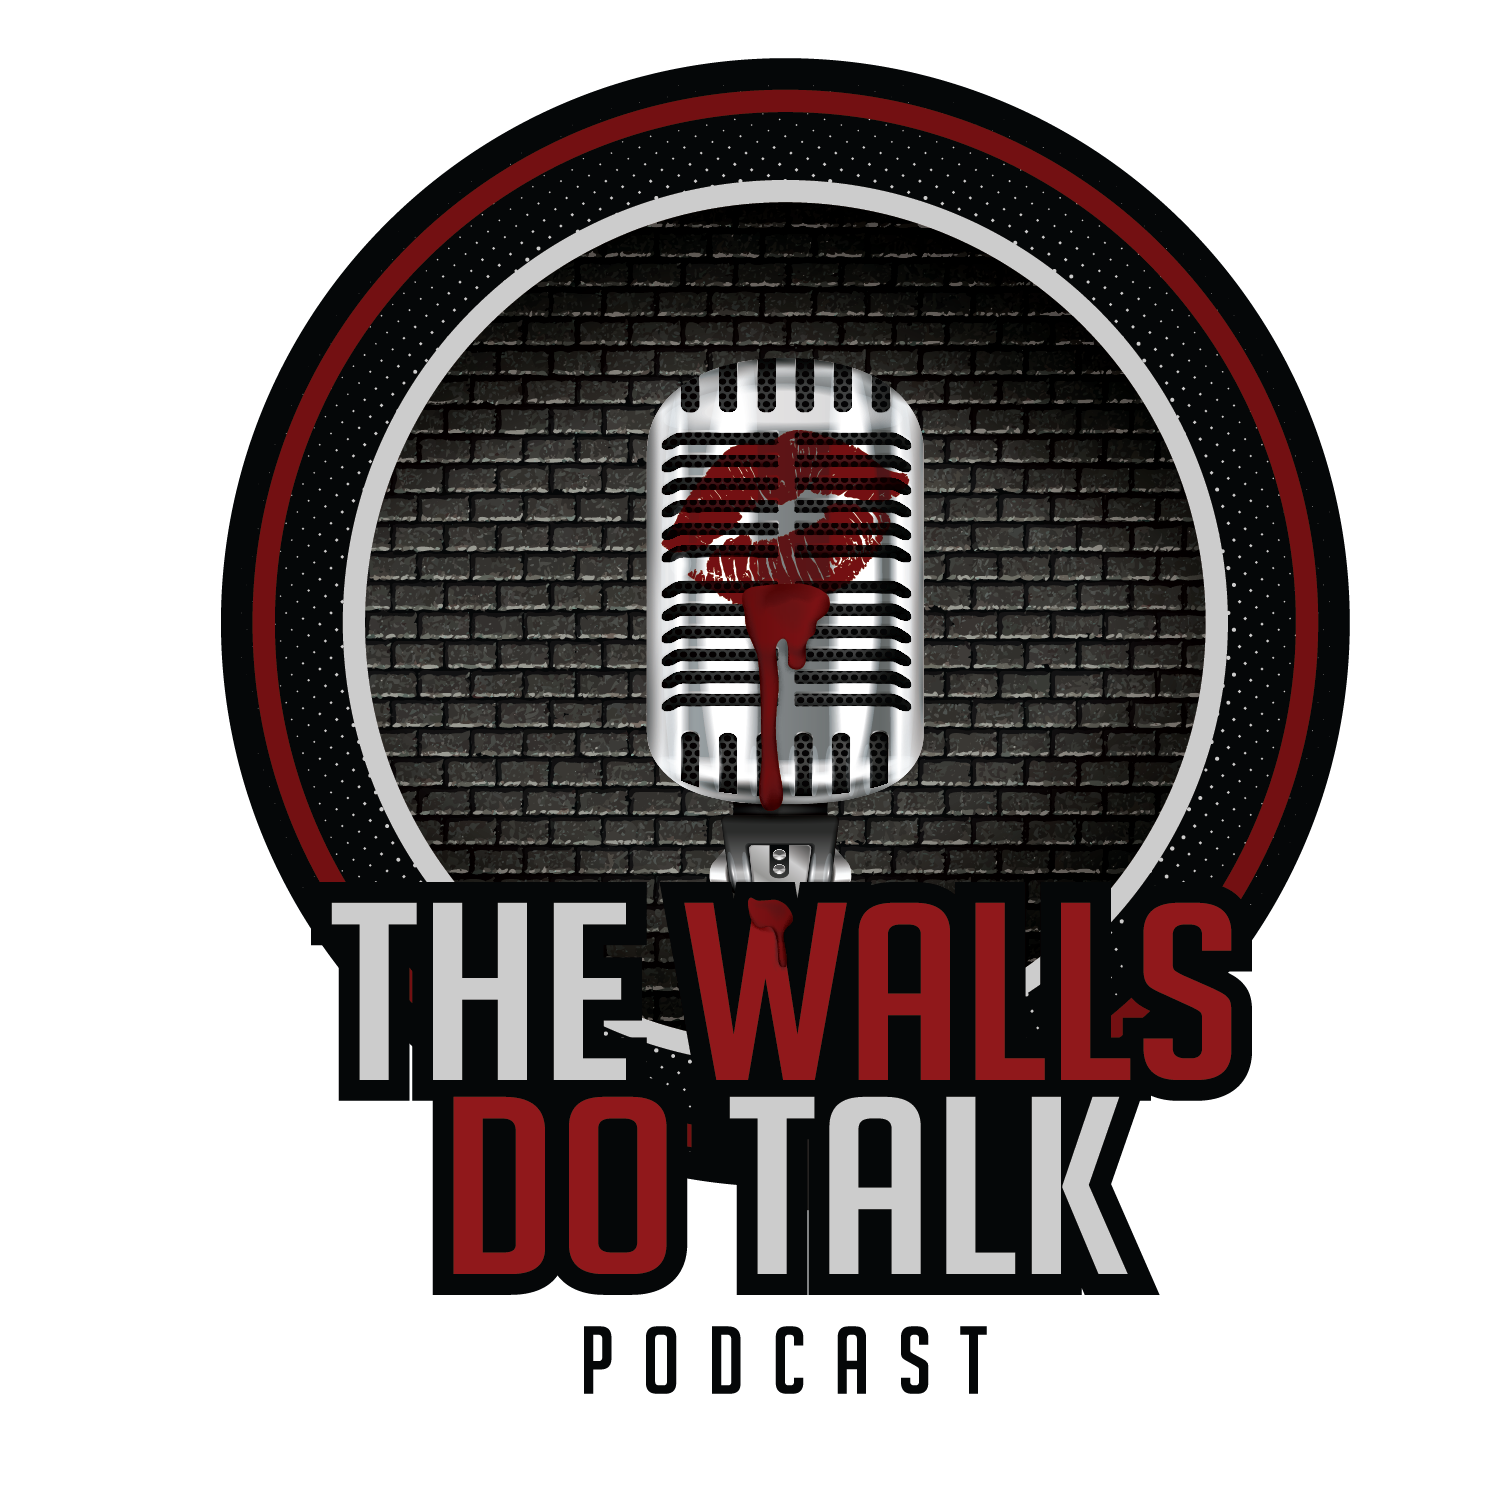 thewallsdotalkpodcast